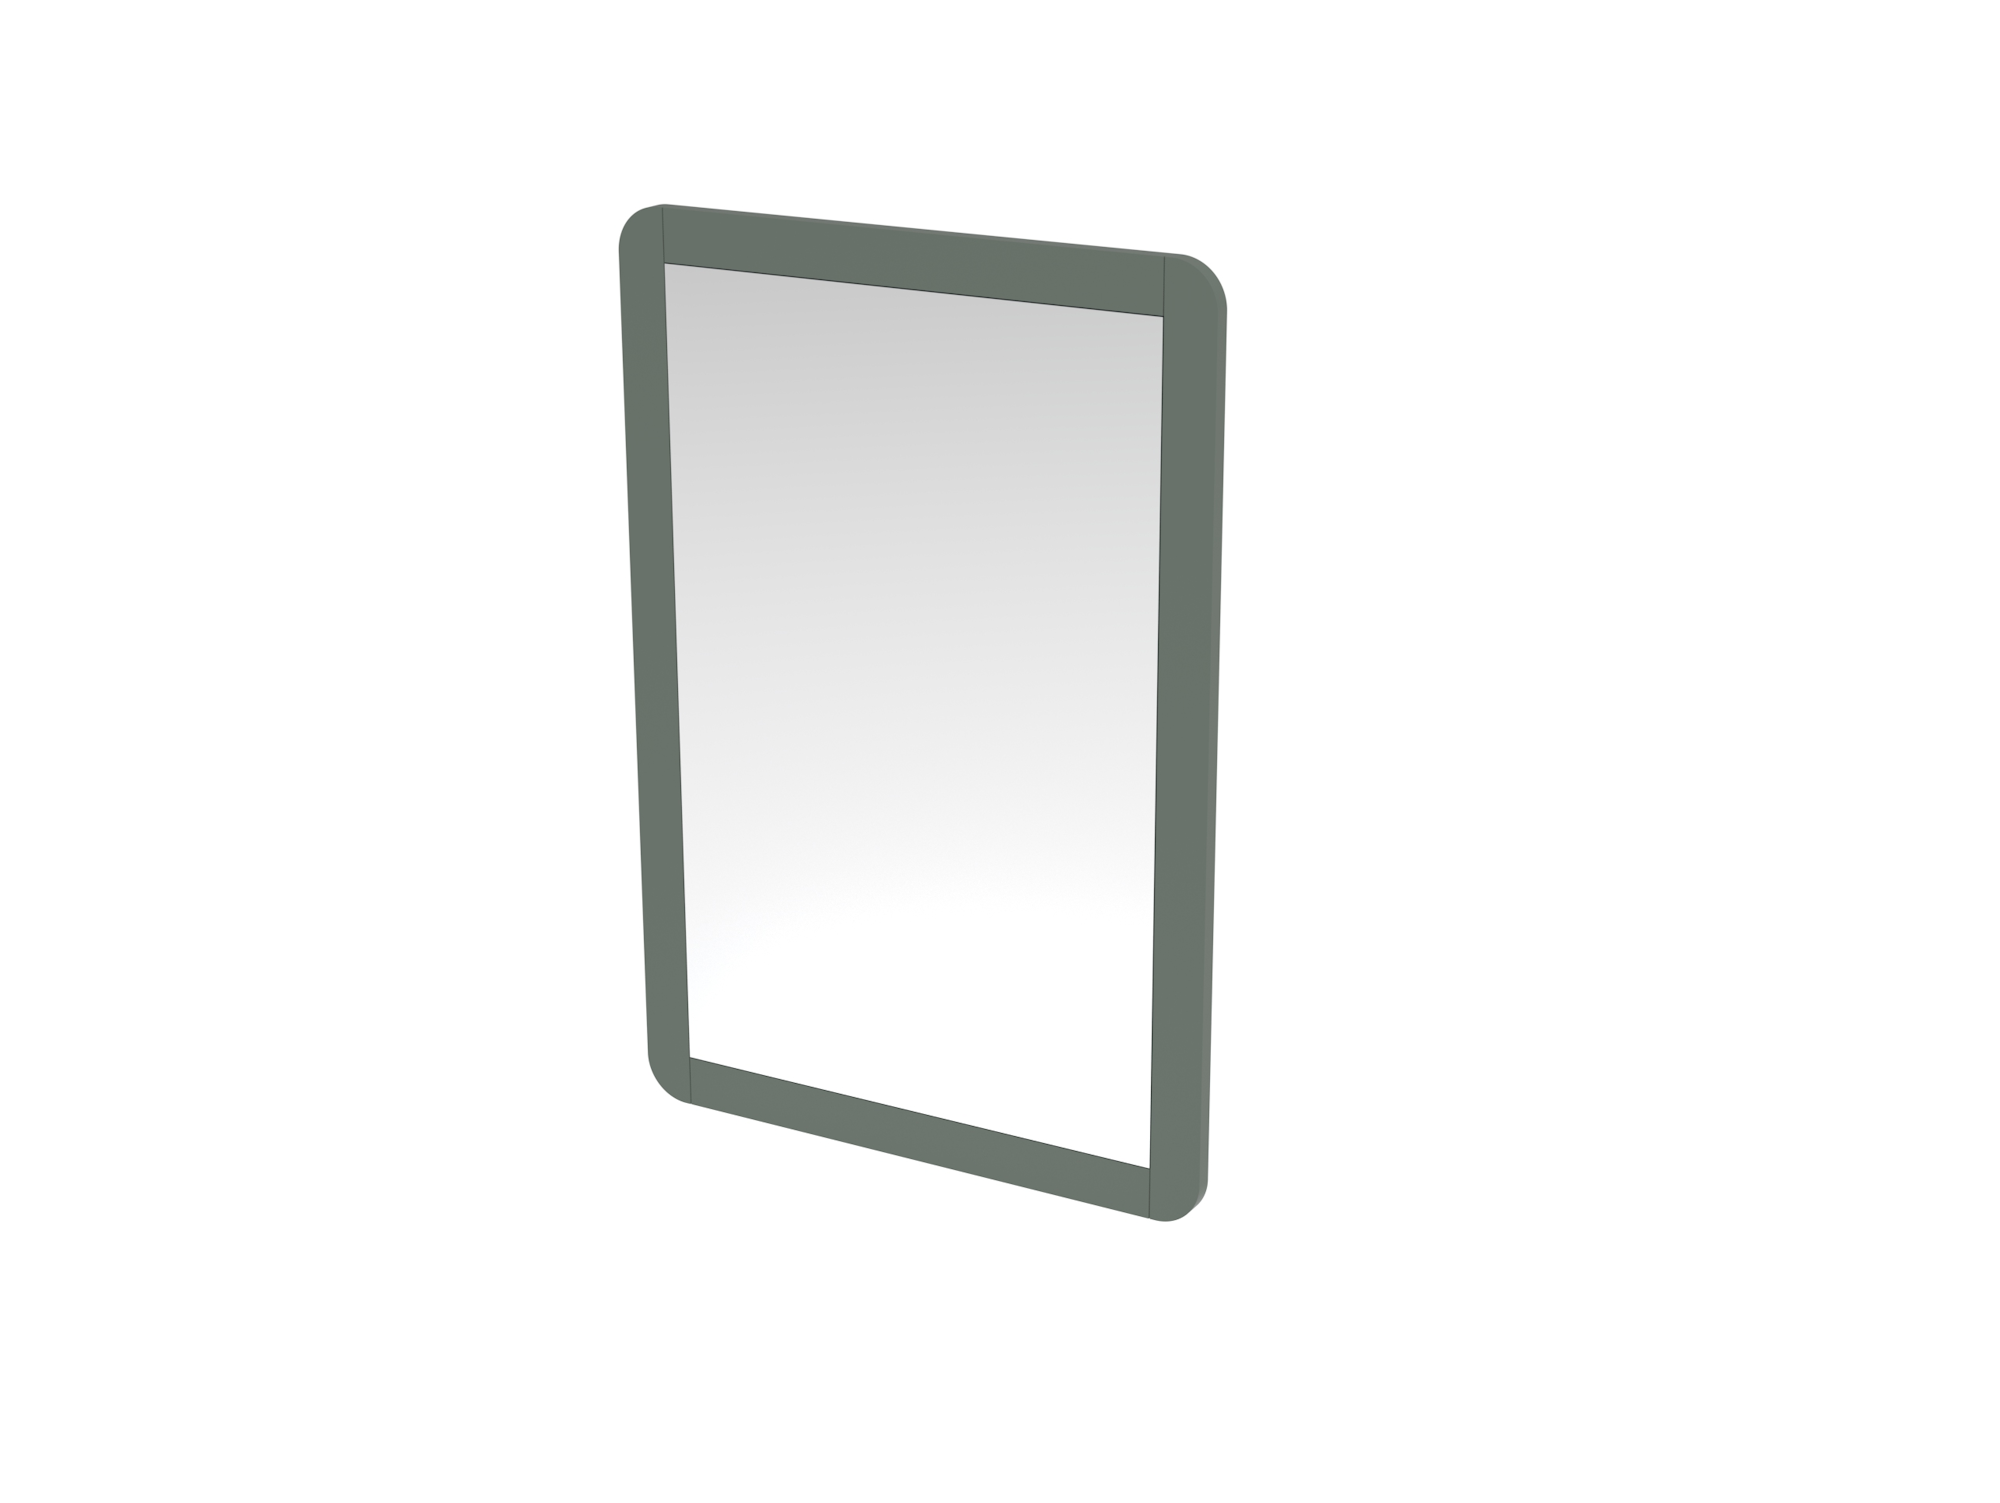 HYDE 55cm 1 door recessed electric mirror cabinet (RH) - Matte Sage